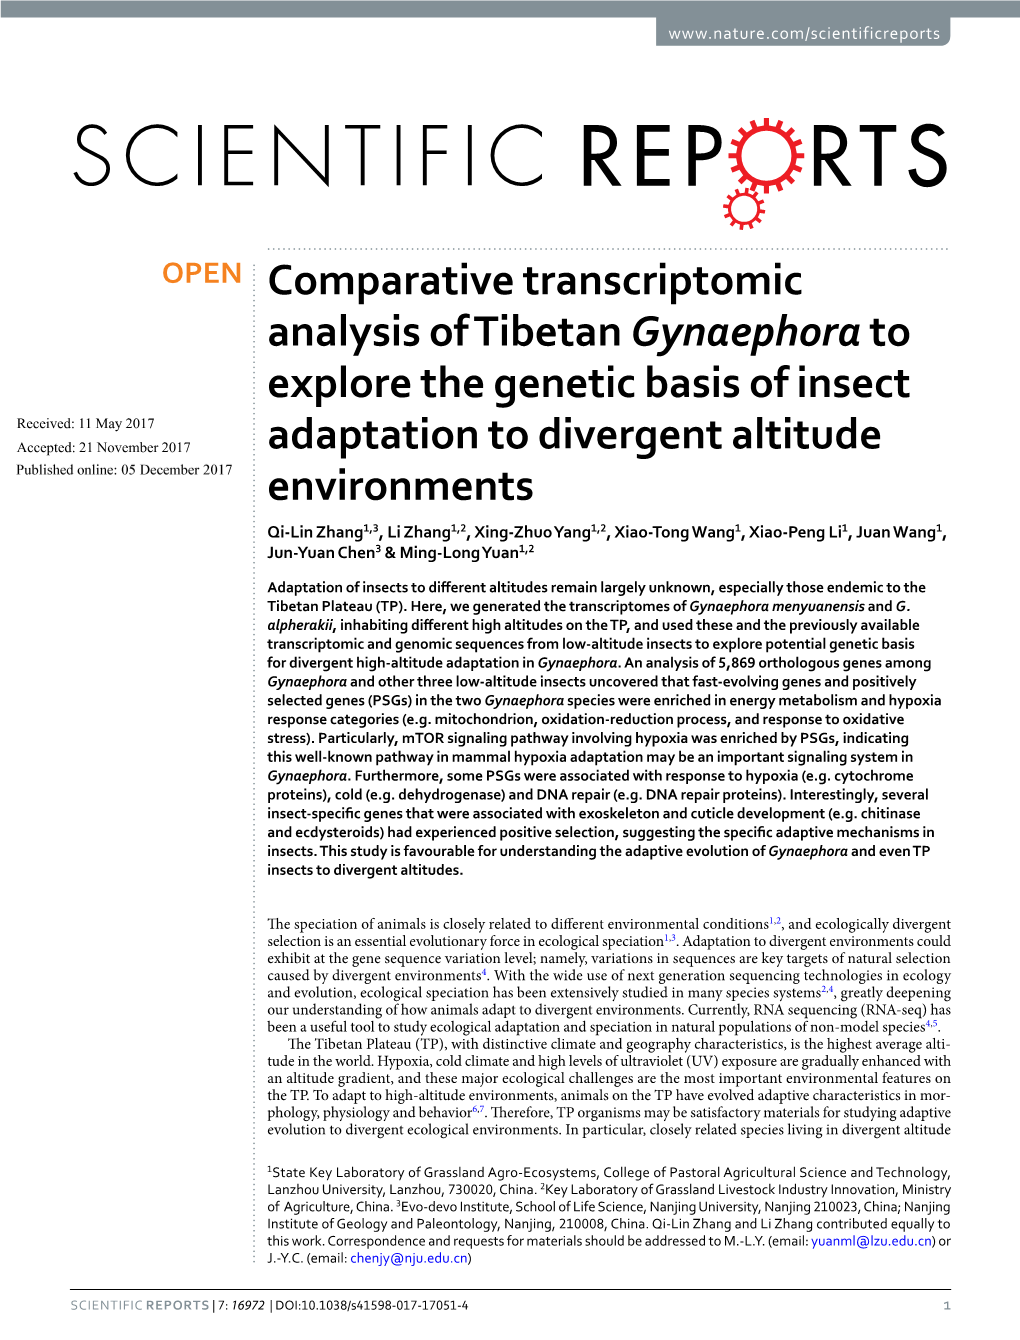 Comparative Transcriptomic Analysis of Tibetan Gynaephora to Explore